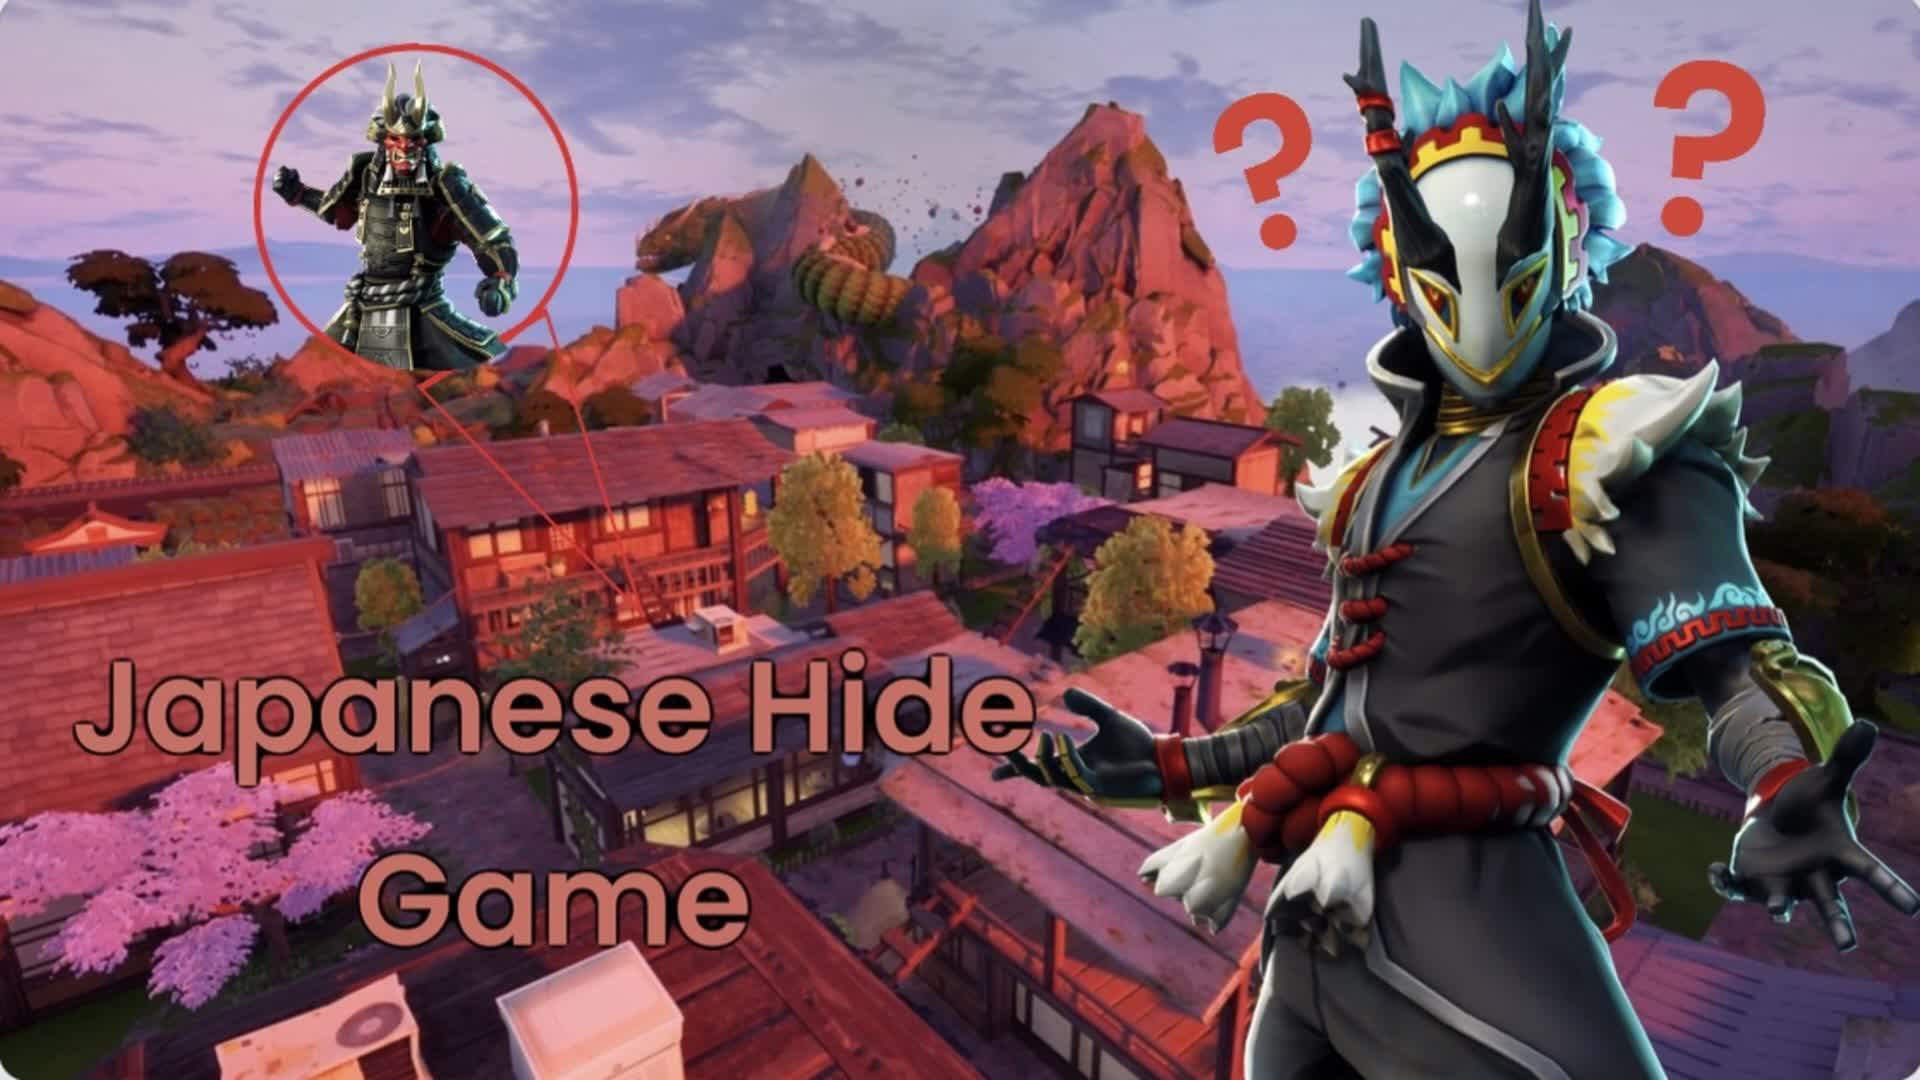 Japanese Hide Game